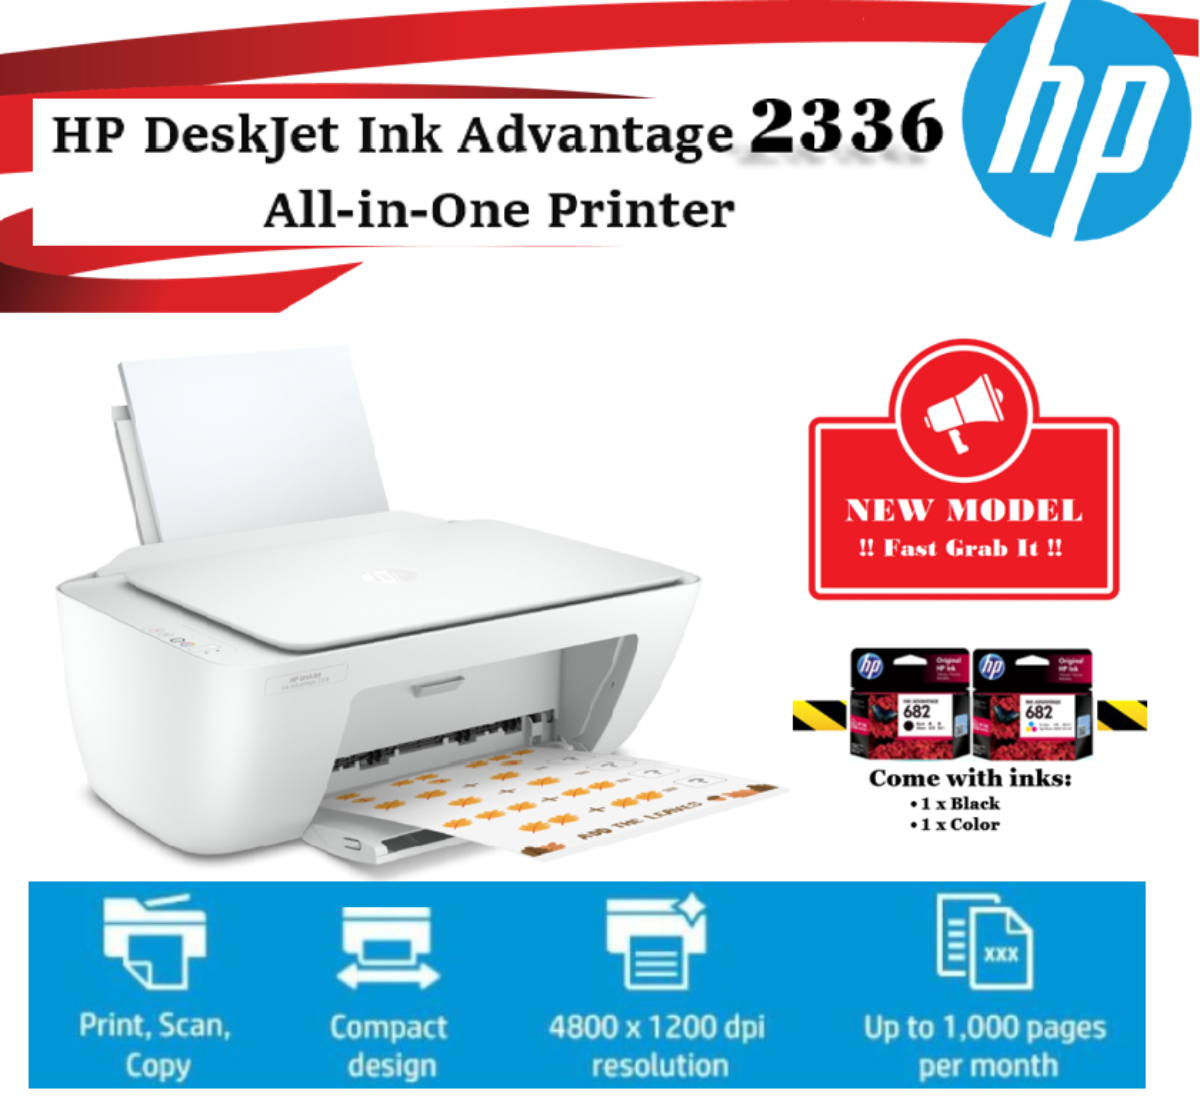 Hp deskjet ink advantage 2336 all-in-one printer